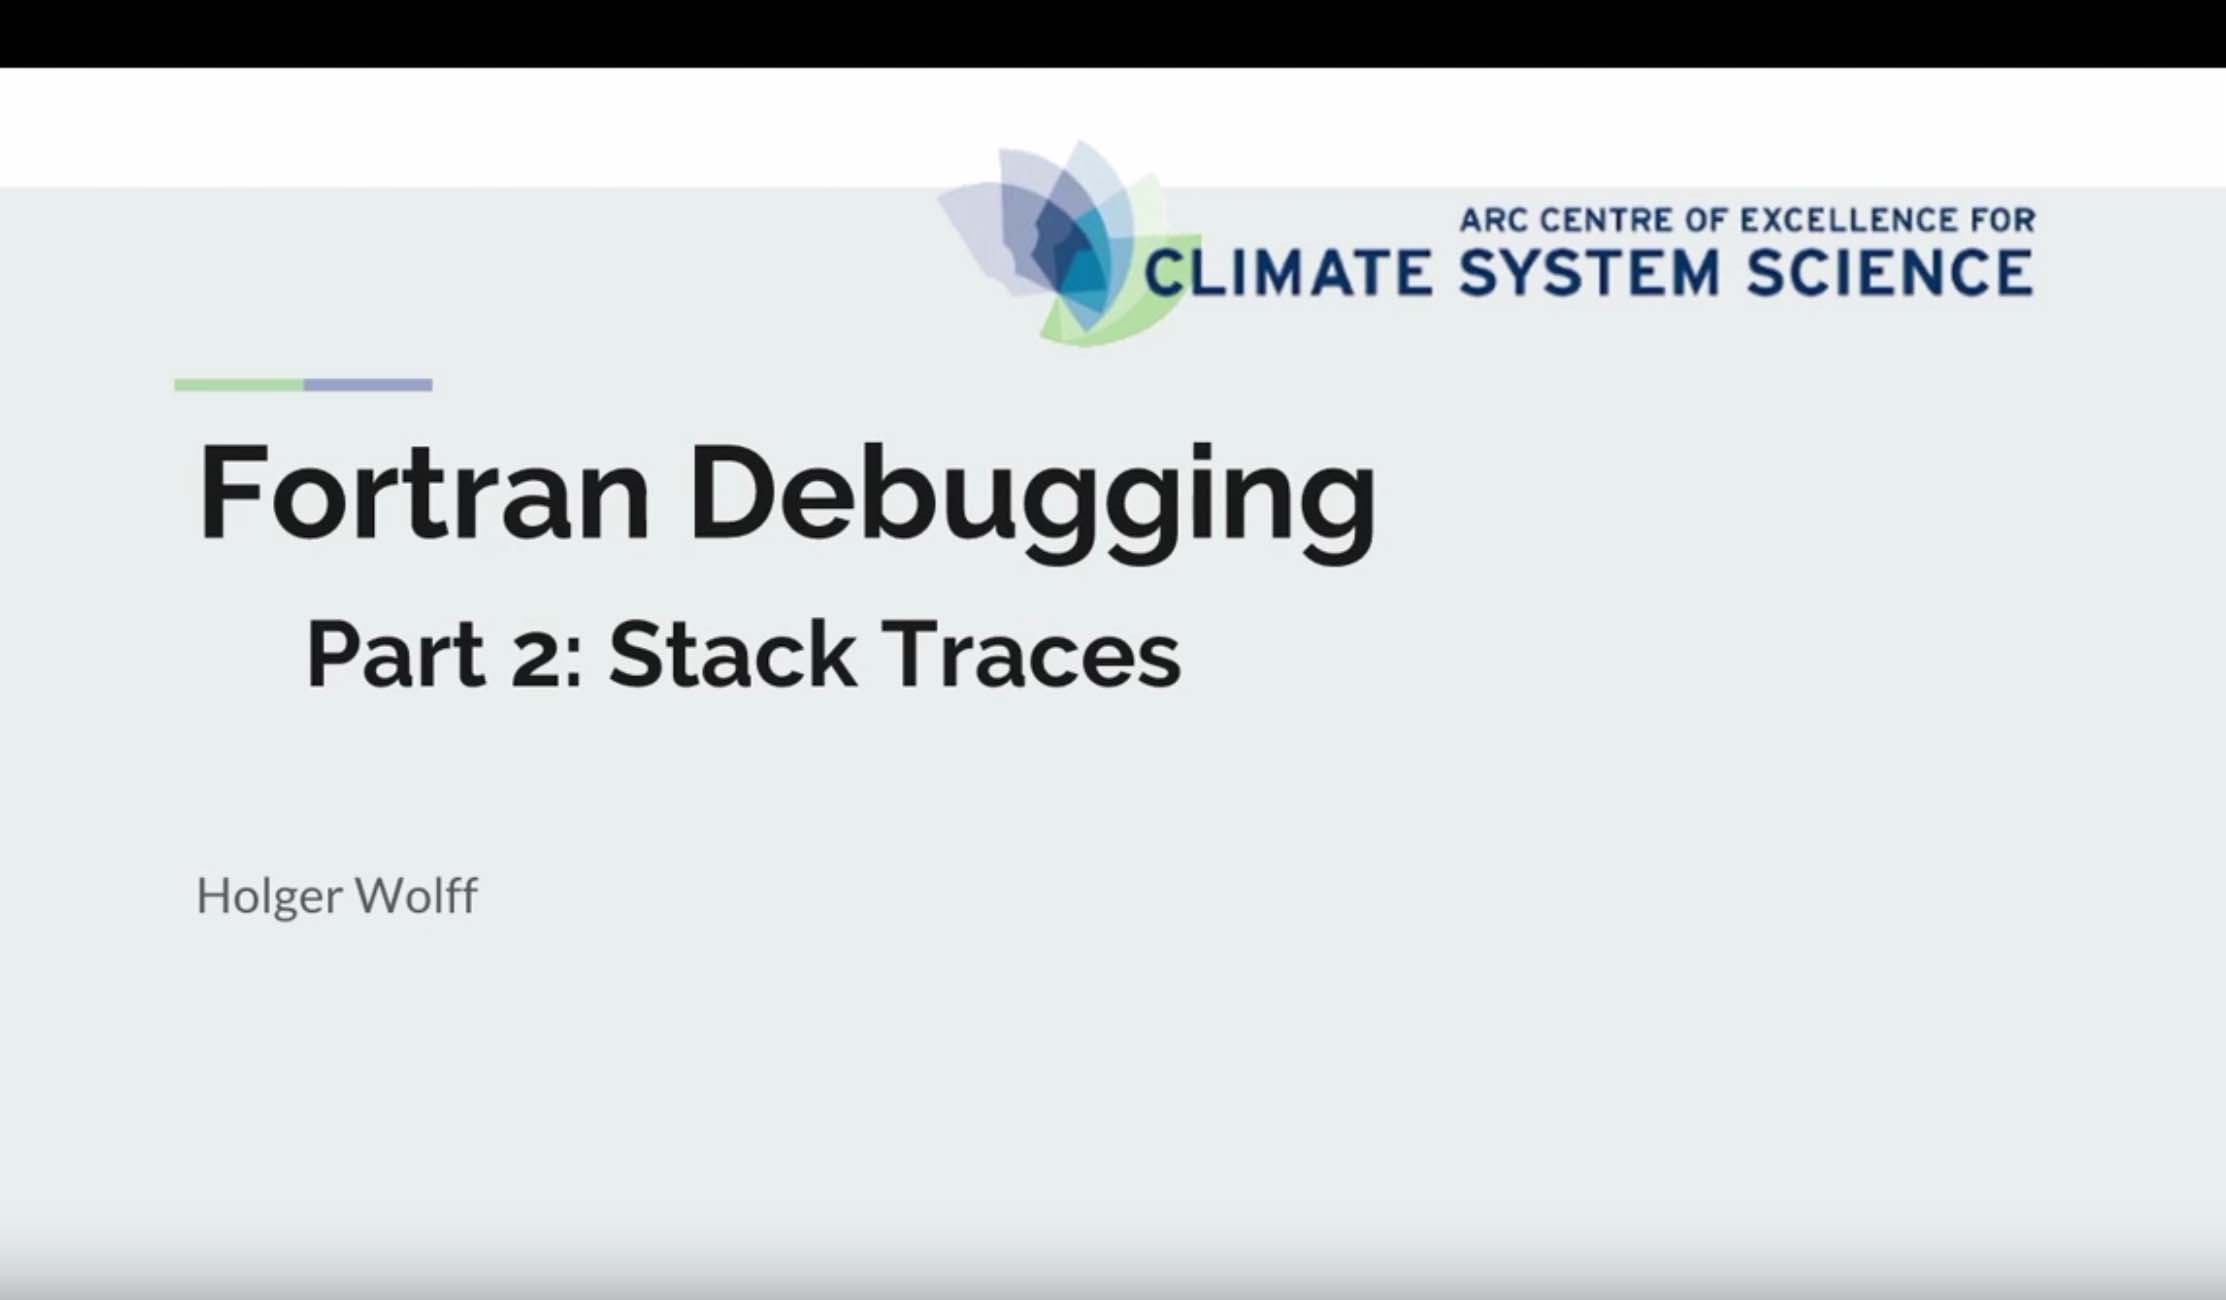 Fortran debugging – Part 2 stack traces